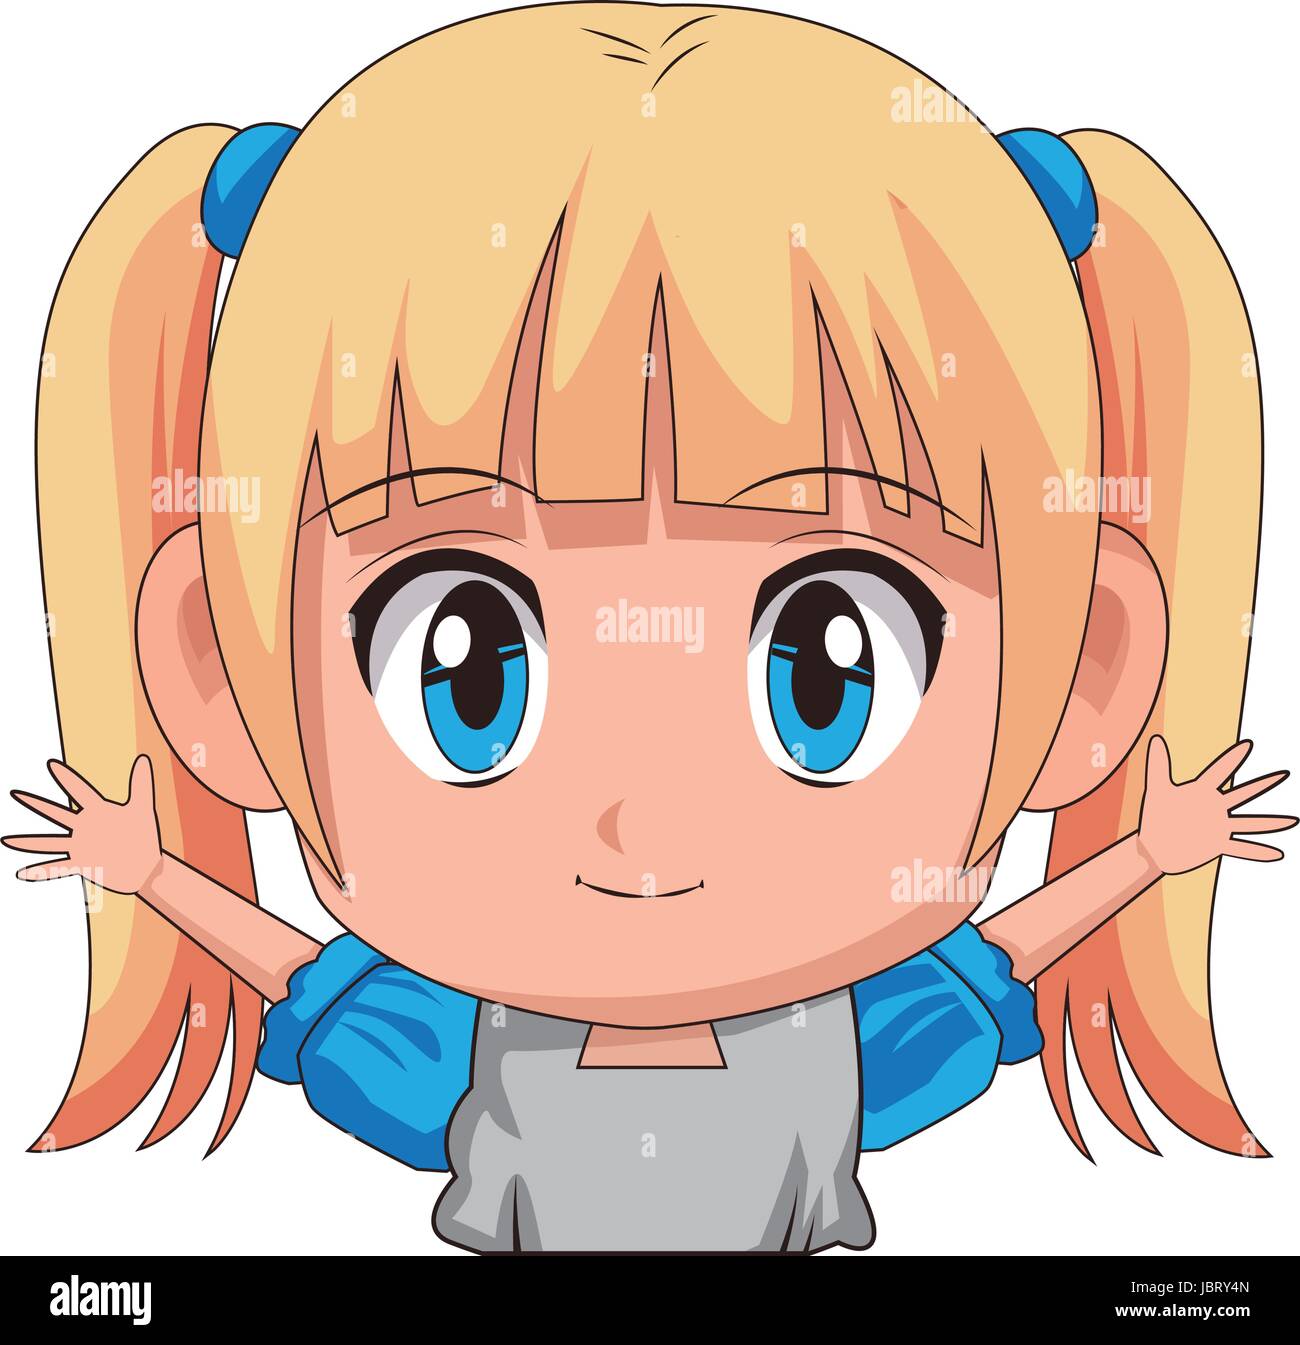 Cartoon carino anime bambina chibi character Immagine e Vettoriale - Alamy